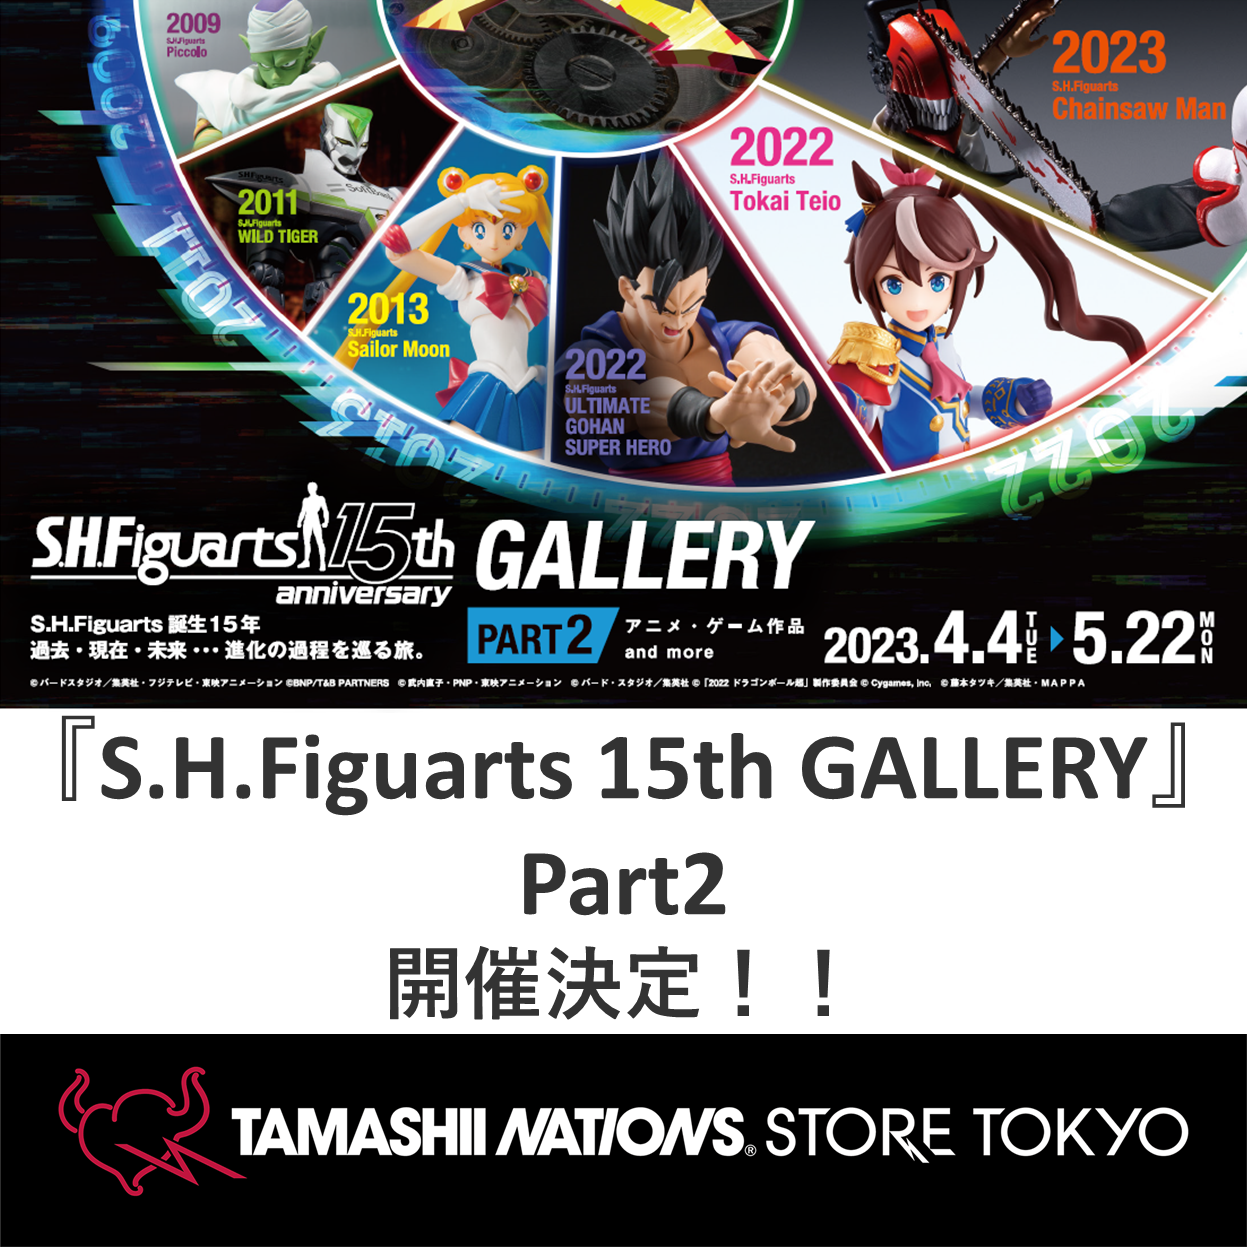 专题网站 [TAMASHII STORE] 展览活动" S.H.Figuarts第15届 GALLERY - PART2" 信息发布!